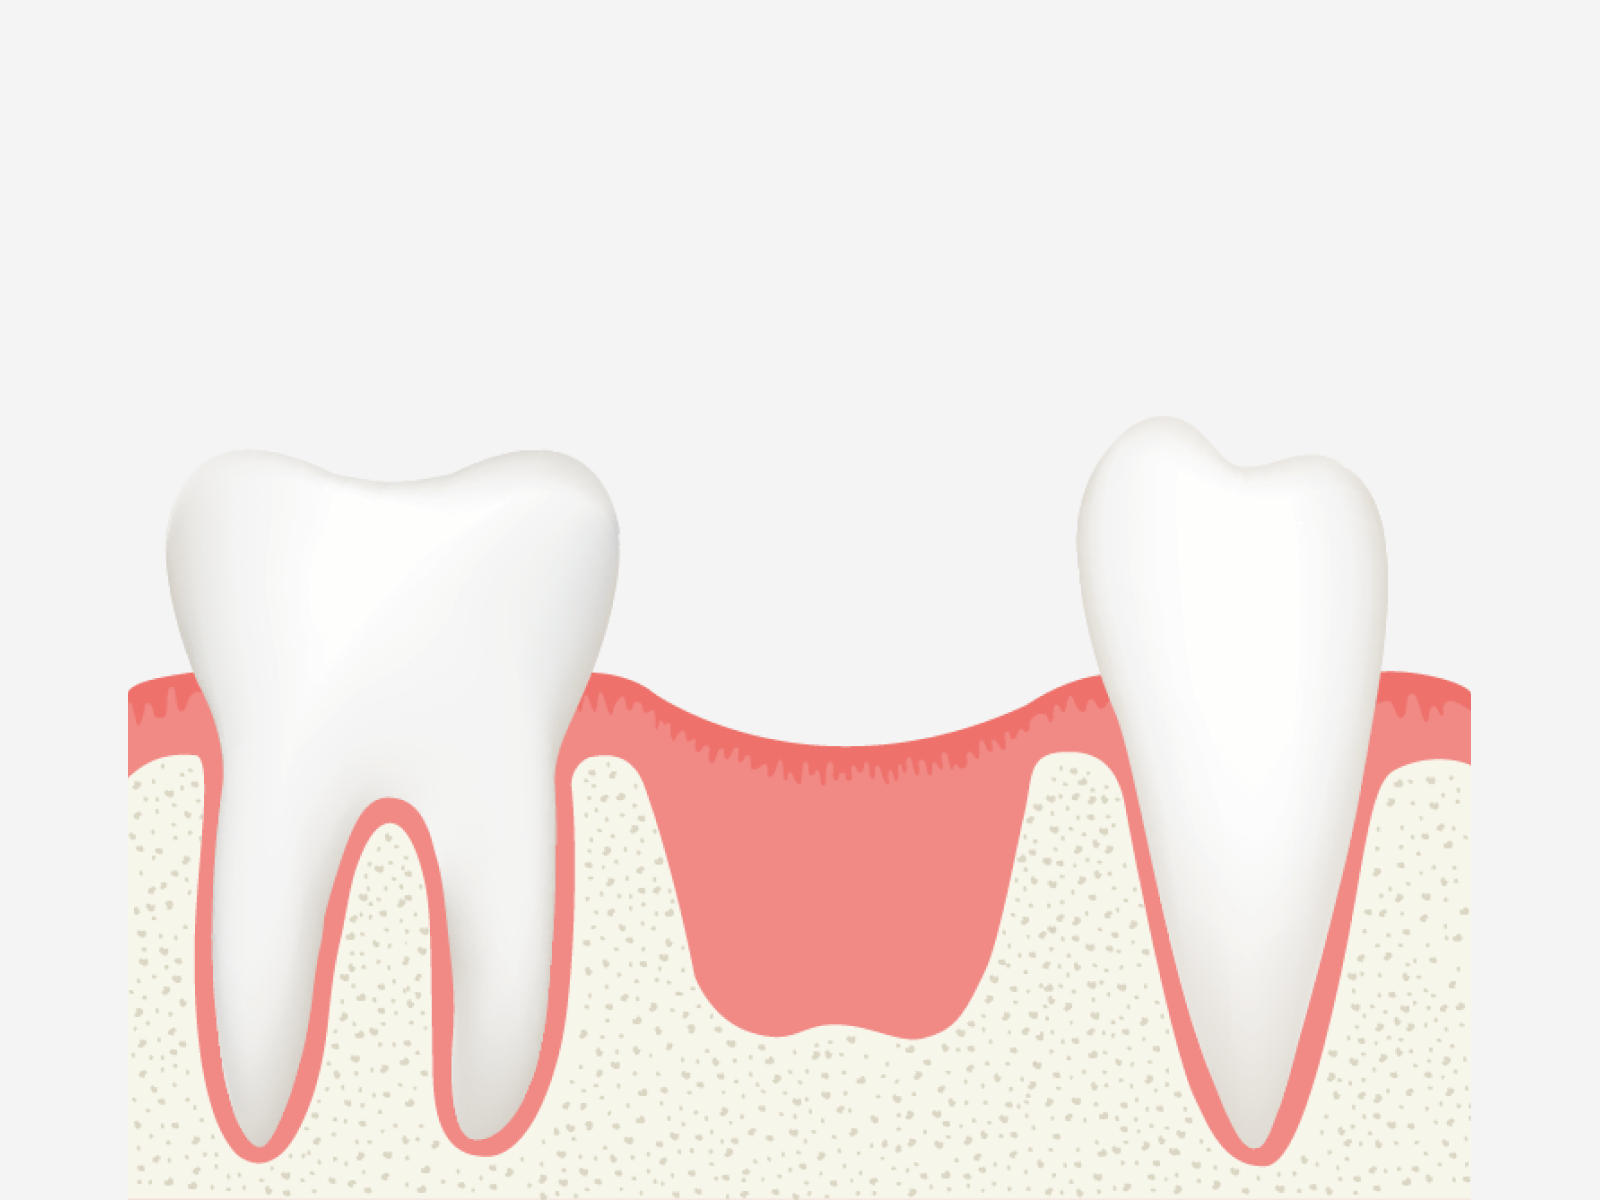 Implantat Ablauf: Abbildung 1: Zahnlücke